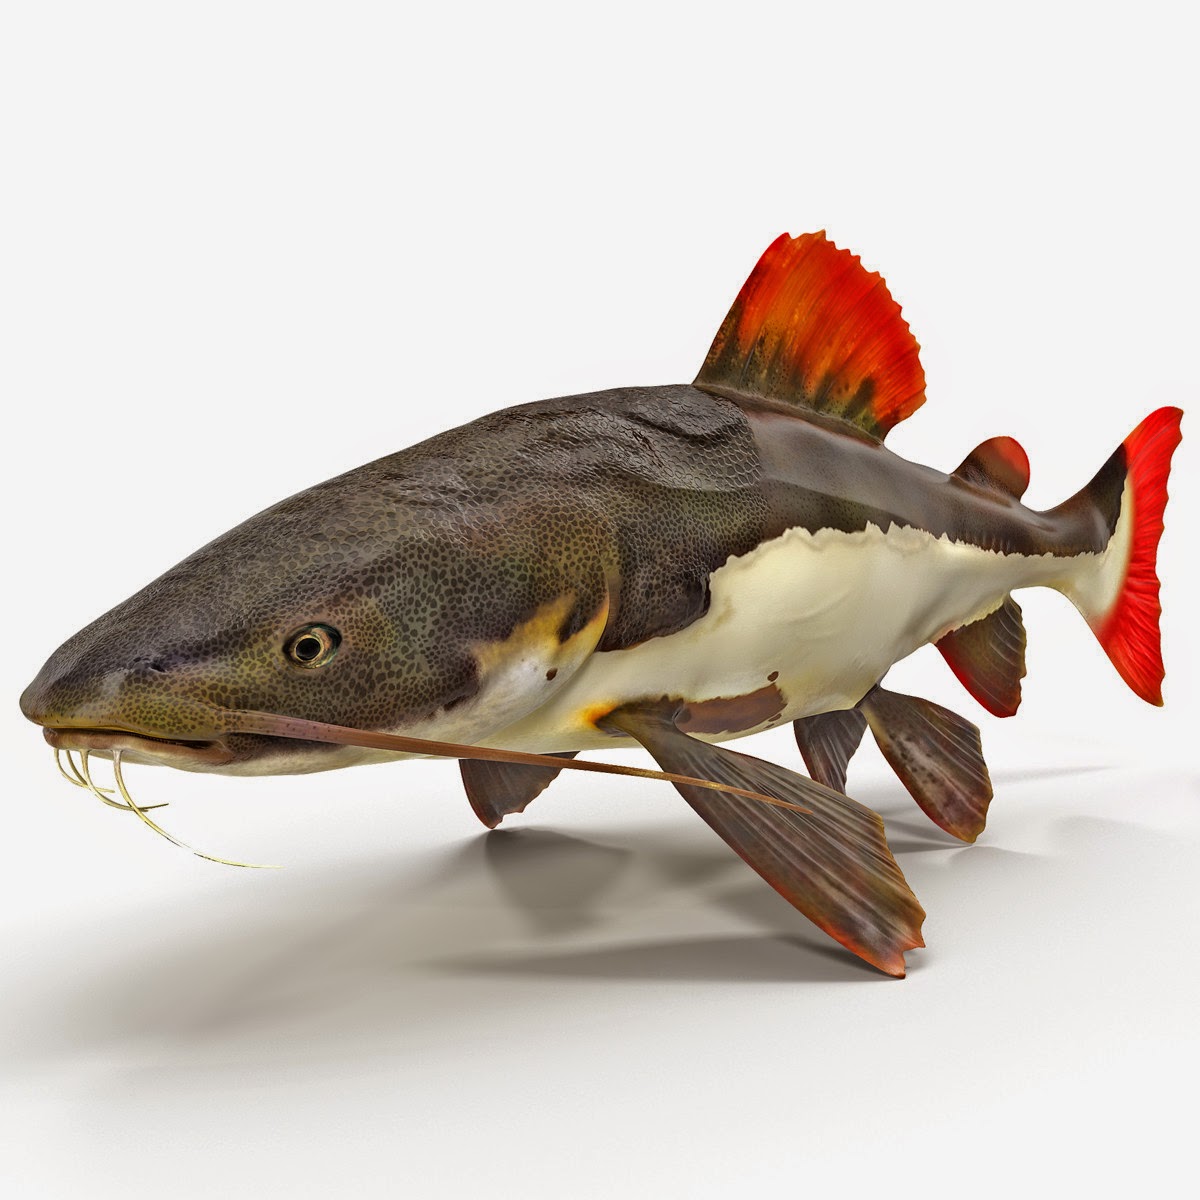 3d models for professionals Redtail Catfish 3d model